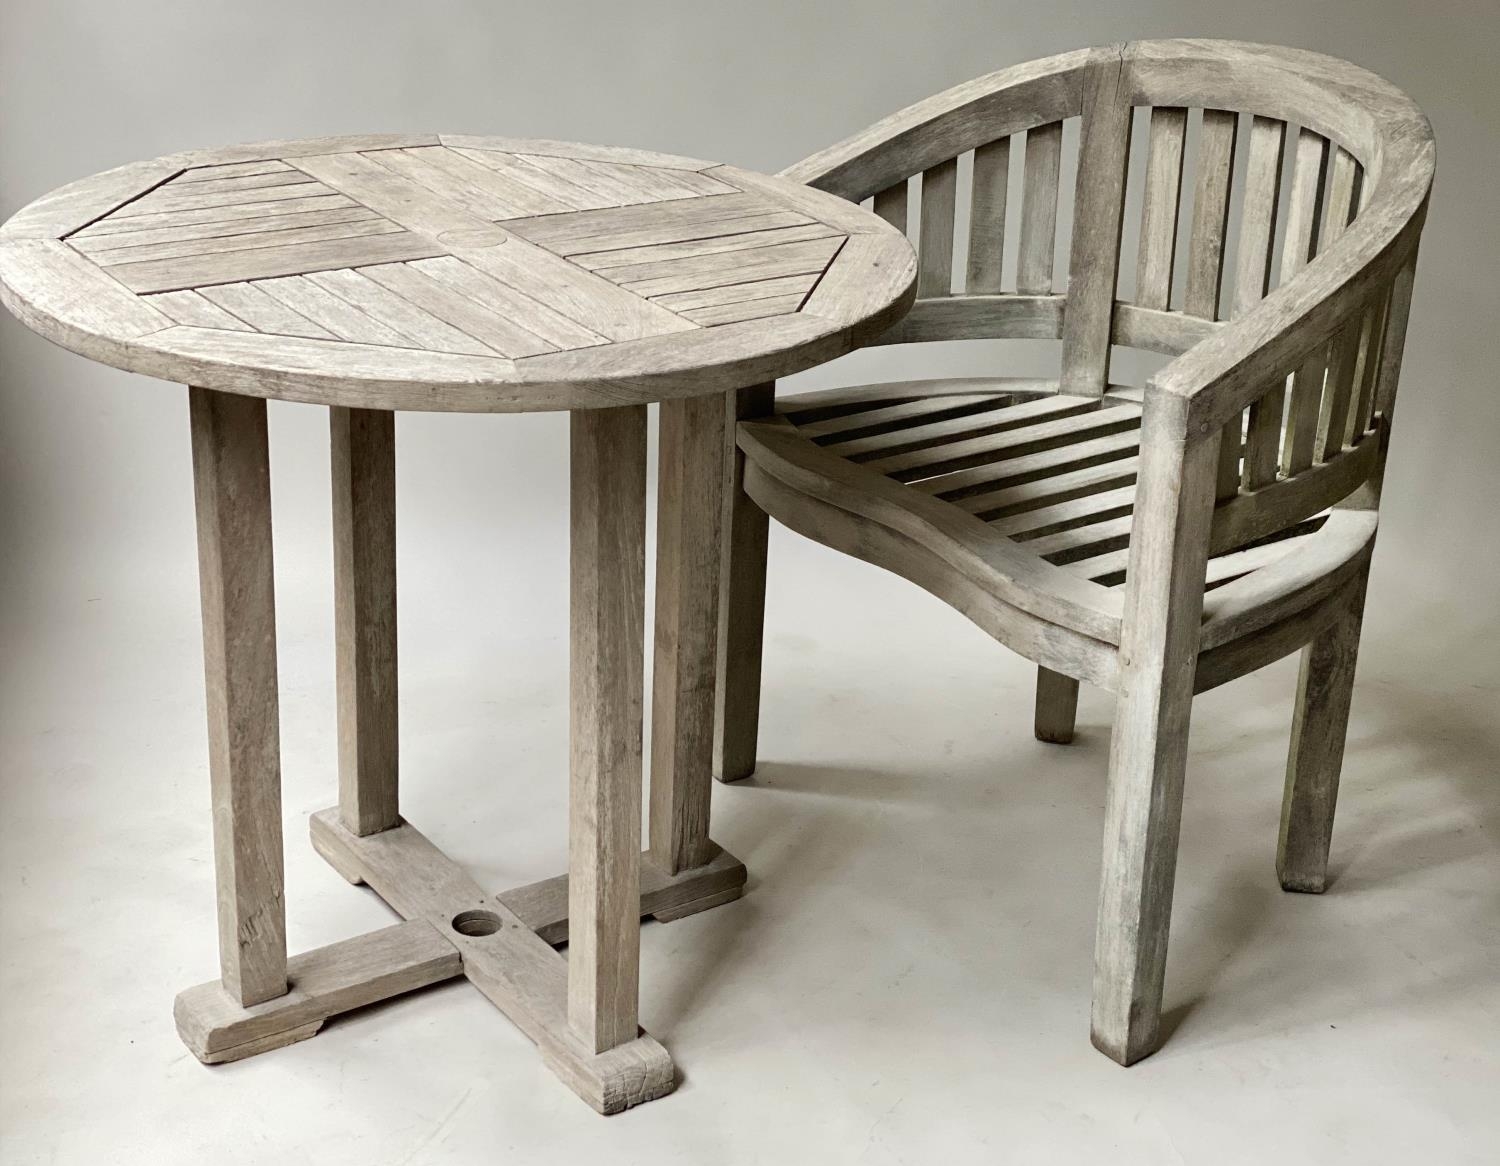 GARDEN TABLE, circular slatted weathered teak together with a Java teak garden armchair, 80cm diam x - Image 2 of 9